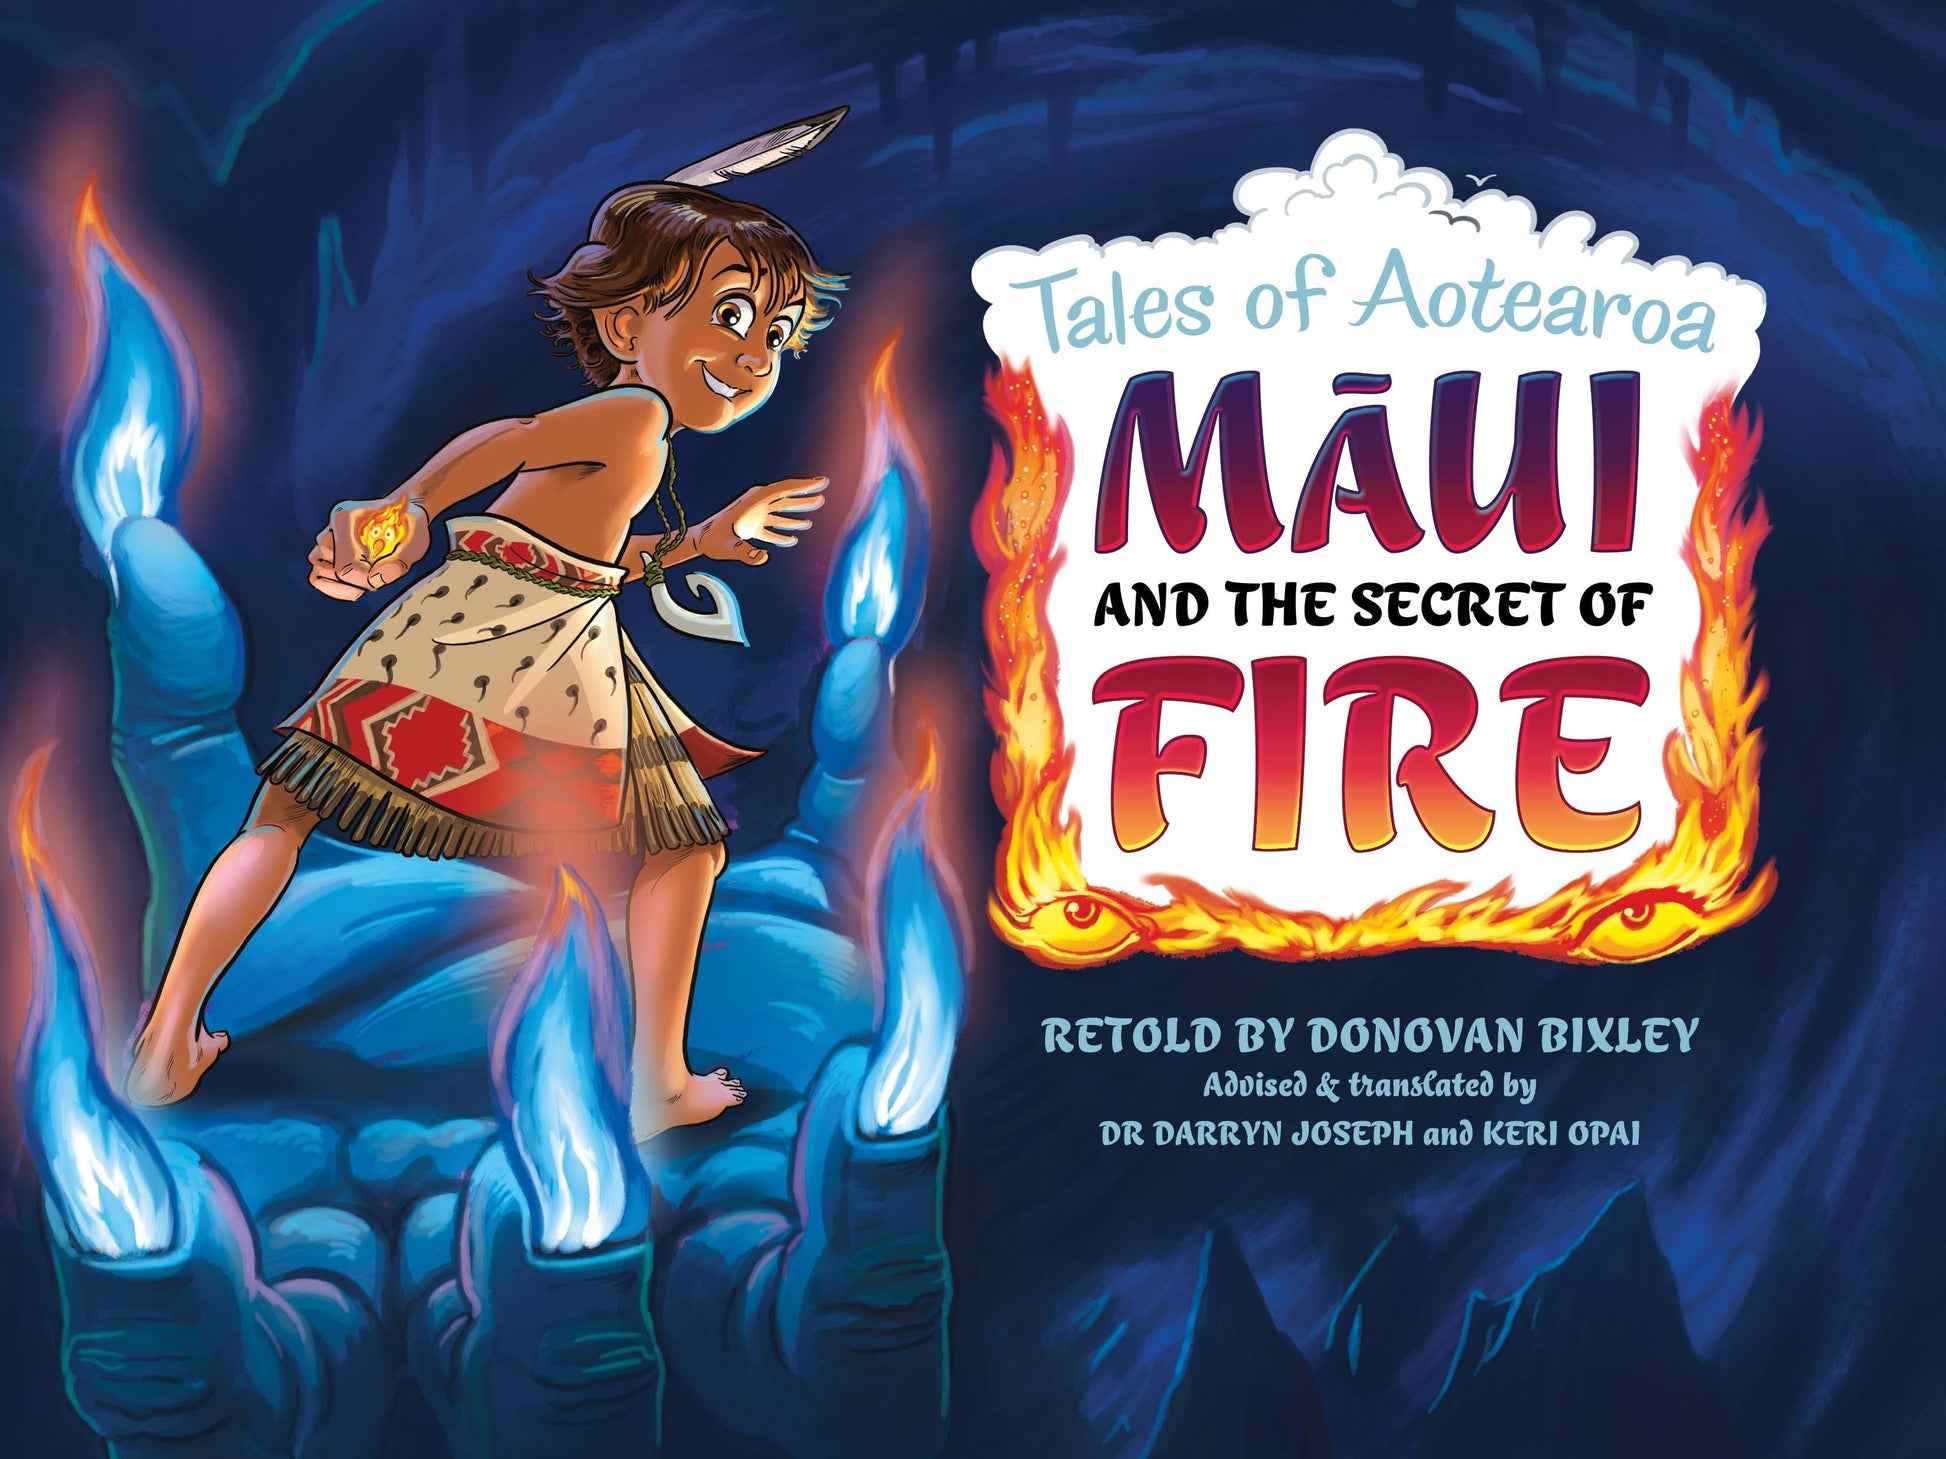 TALES OF AOTEAROA MAUI AND THE SECRET OF FIRE Retold by Donovan Bixley - City Books & Lotto